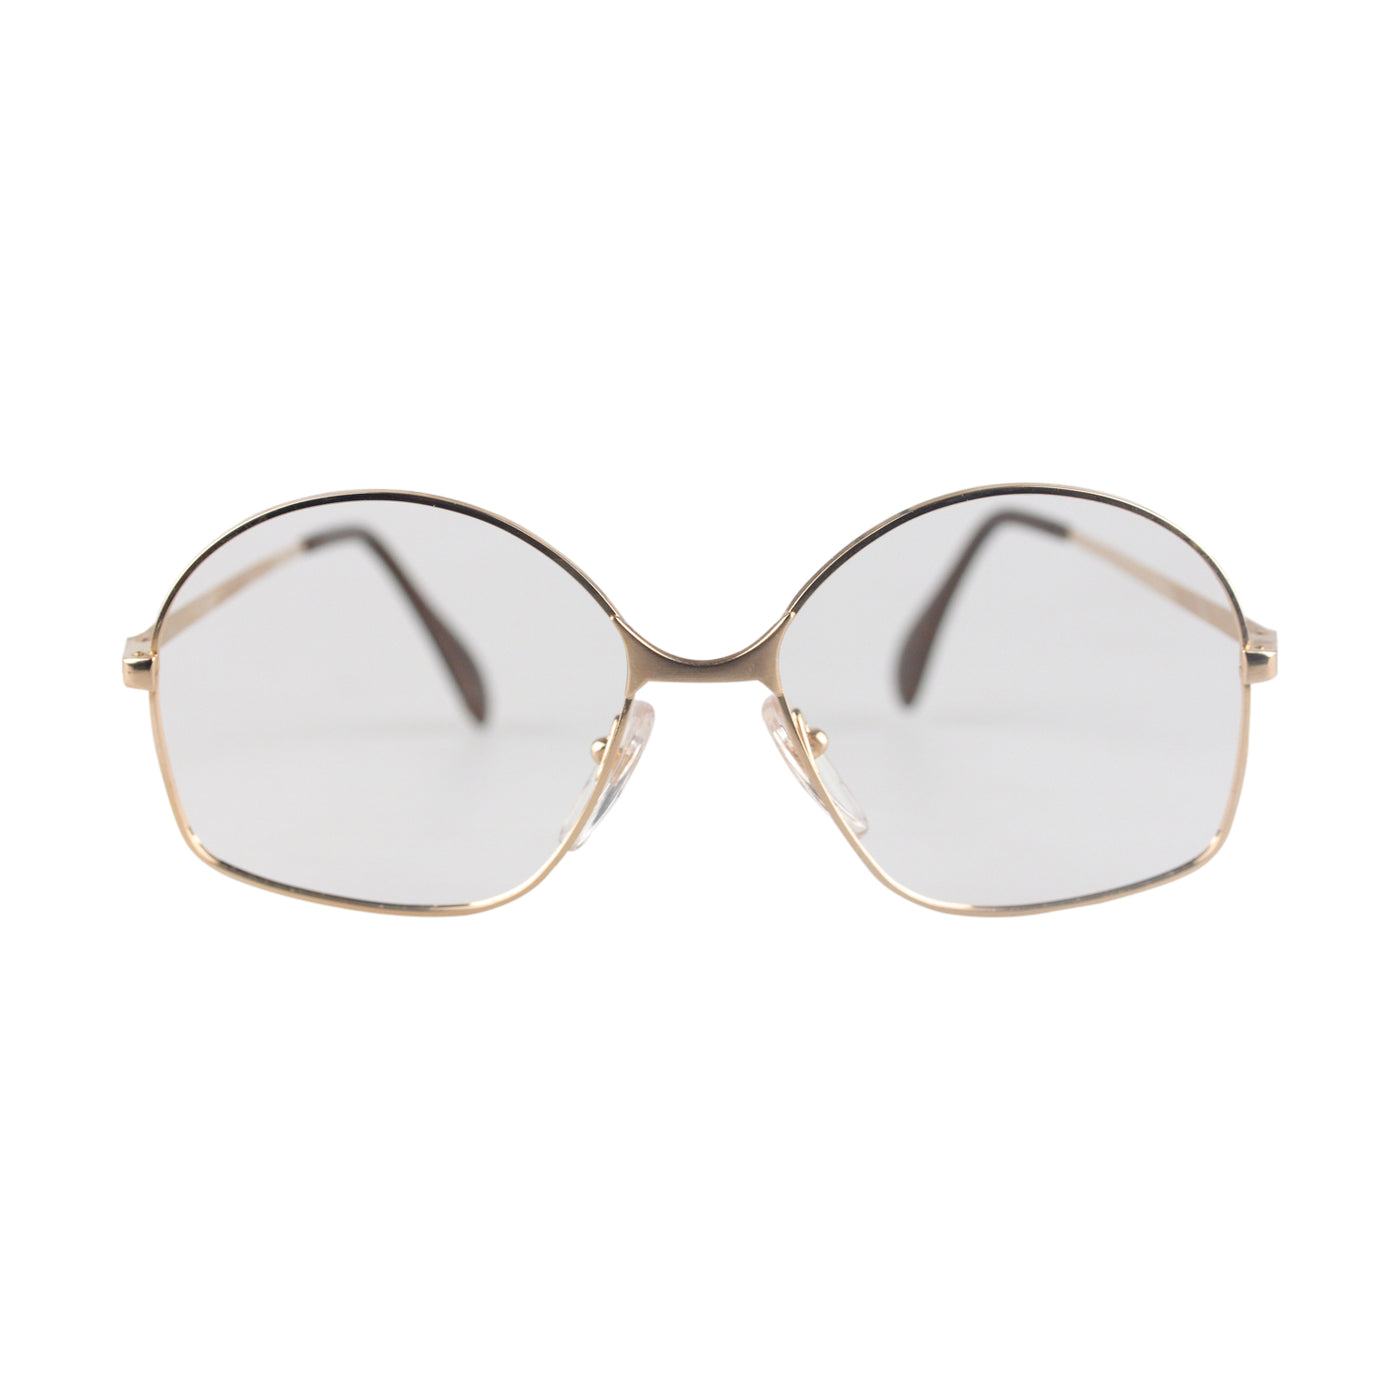 Vogue D'Or by Bausch & Lomb 1/20 10K GF Gold Mint Eyeglasses Mod 516